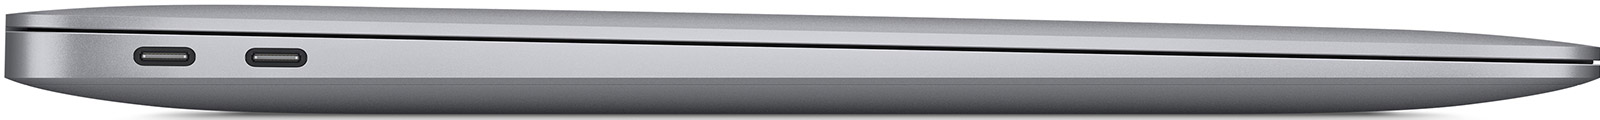 Apple-MacBook-Air-13-3-M1-8-Core-16-GB-512-GB-7-Core-Grafik-Space-Grau-US-Ame-05.jpg